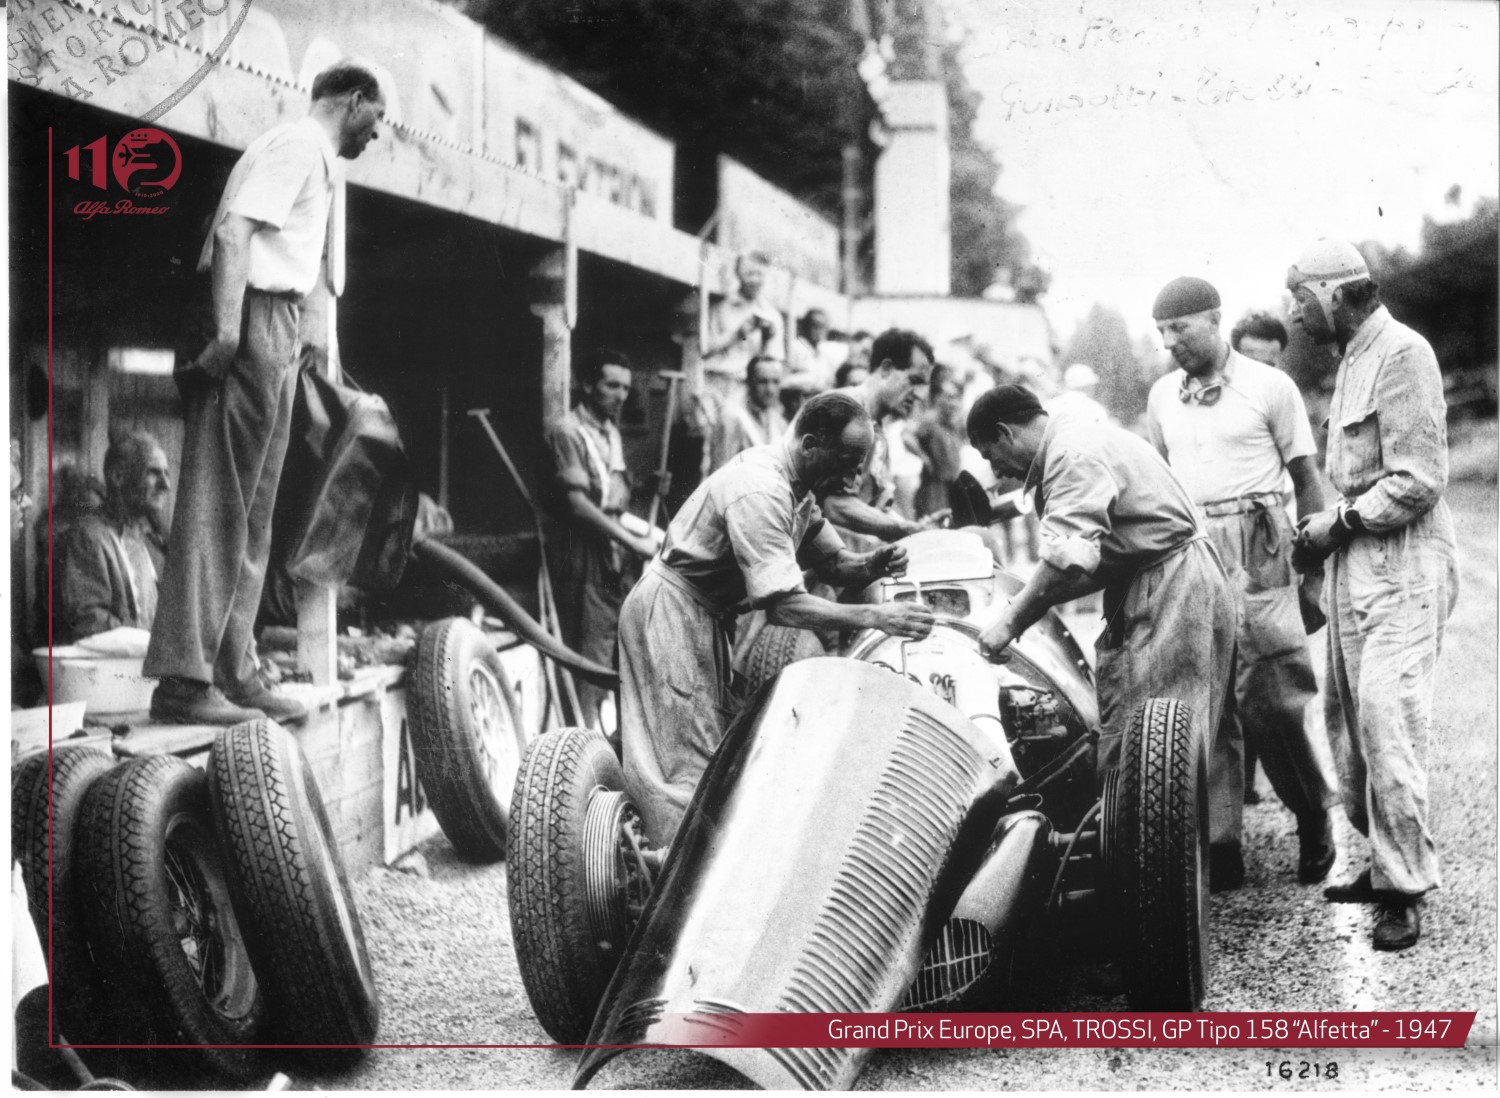 1947 Trossi in the Spa pits while mechanics work on his Alfa Romeo